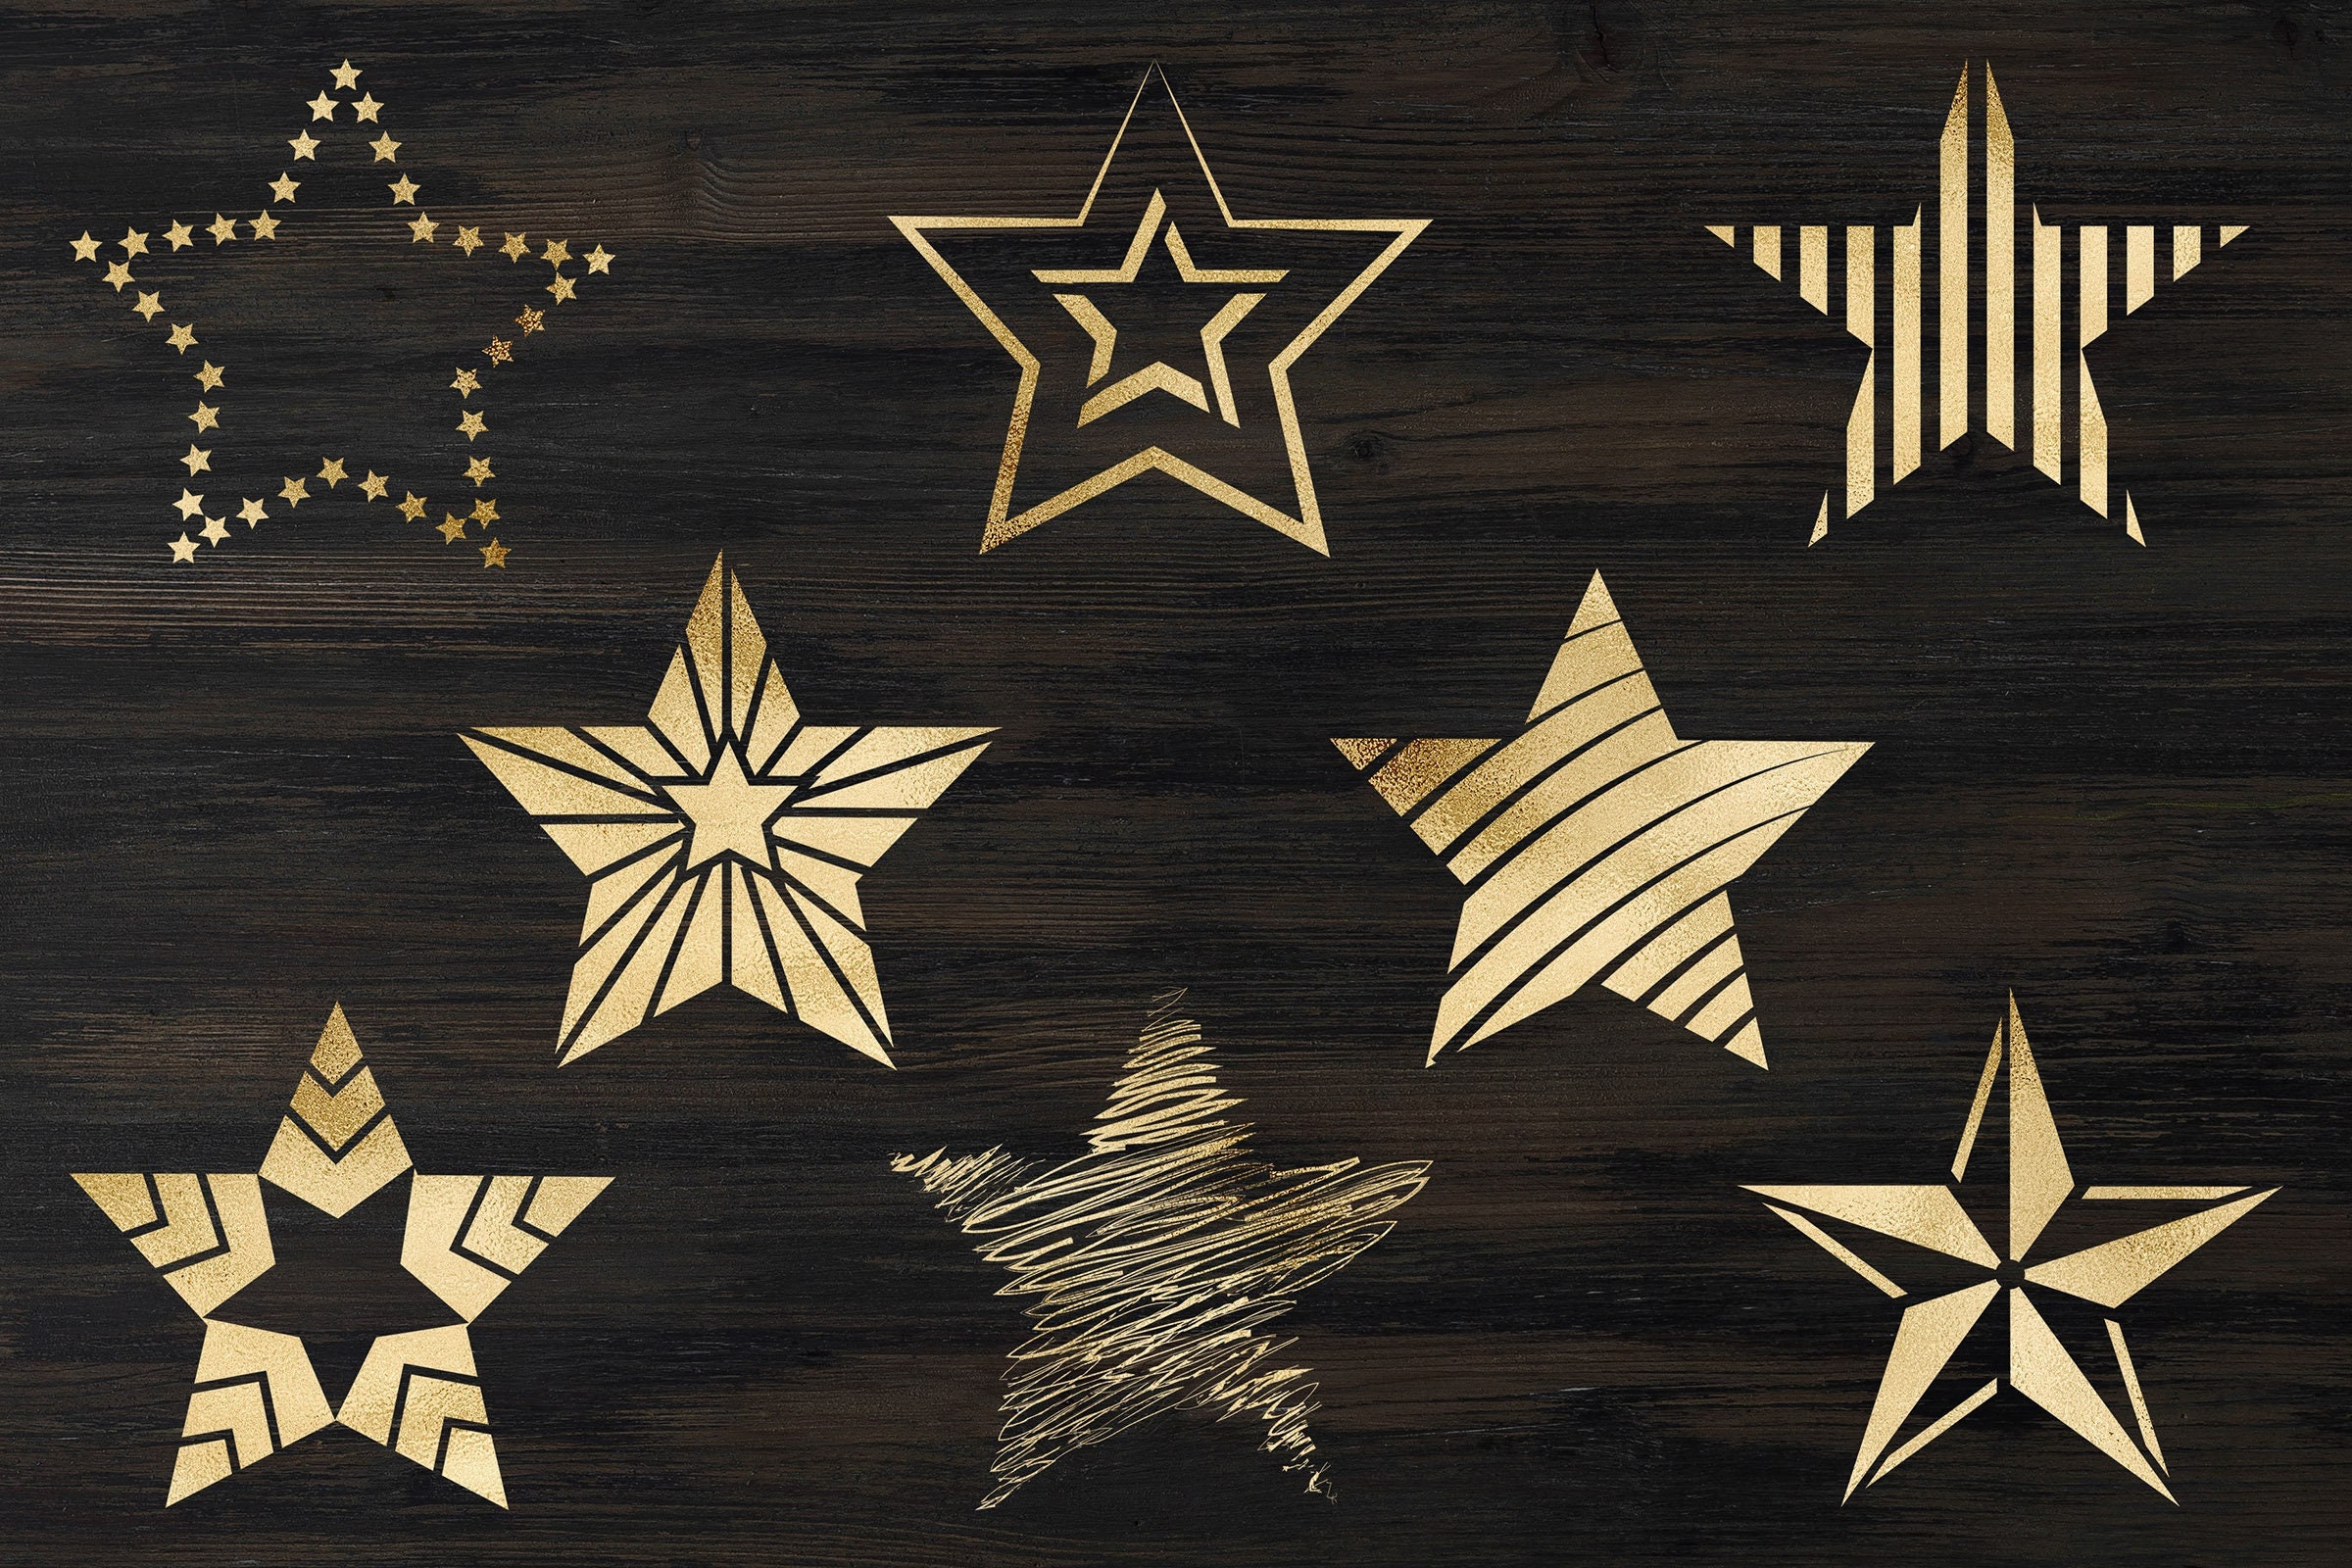 Gold Star, Stars Clip Art, Stars Glitter, Foil Gold, Digital Clipart,  Cards, Invitationsrt, PNG 